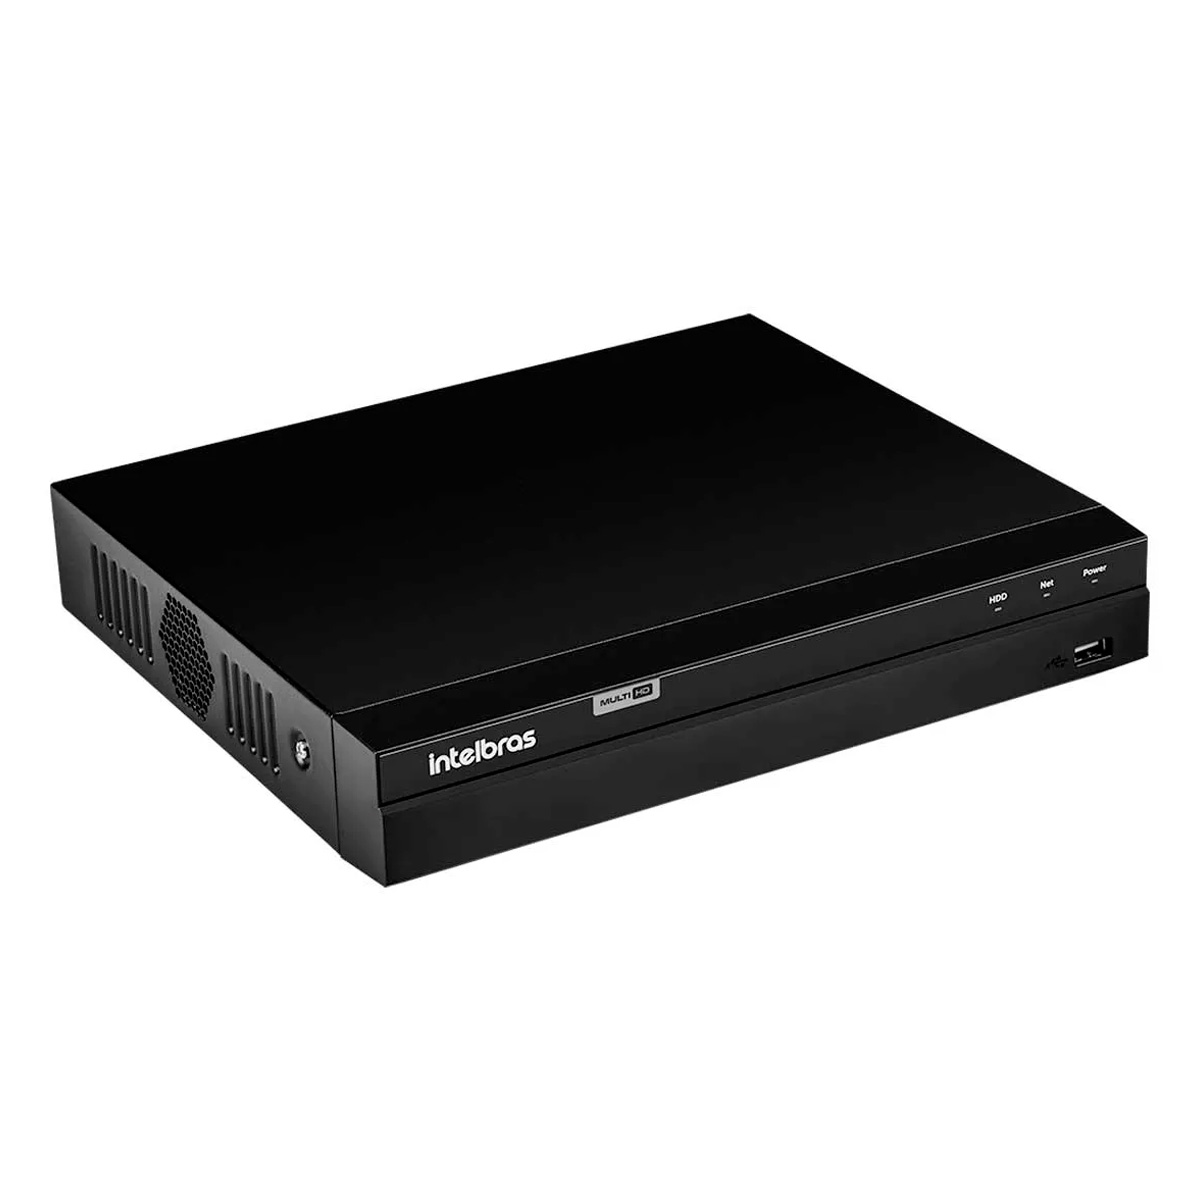 DVR 8 Canais Intelbras MHDX 1208 AM - Gravador Digital - Multi HD - IP, HDCVI, HDTVI 2.0, AHD-M - Compatibilidade ONVIF